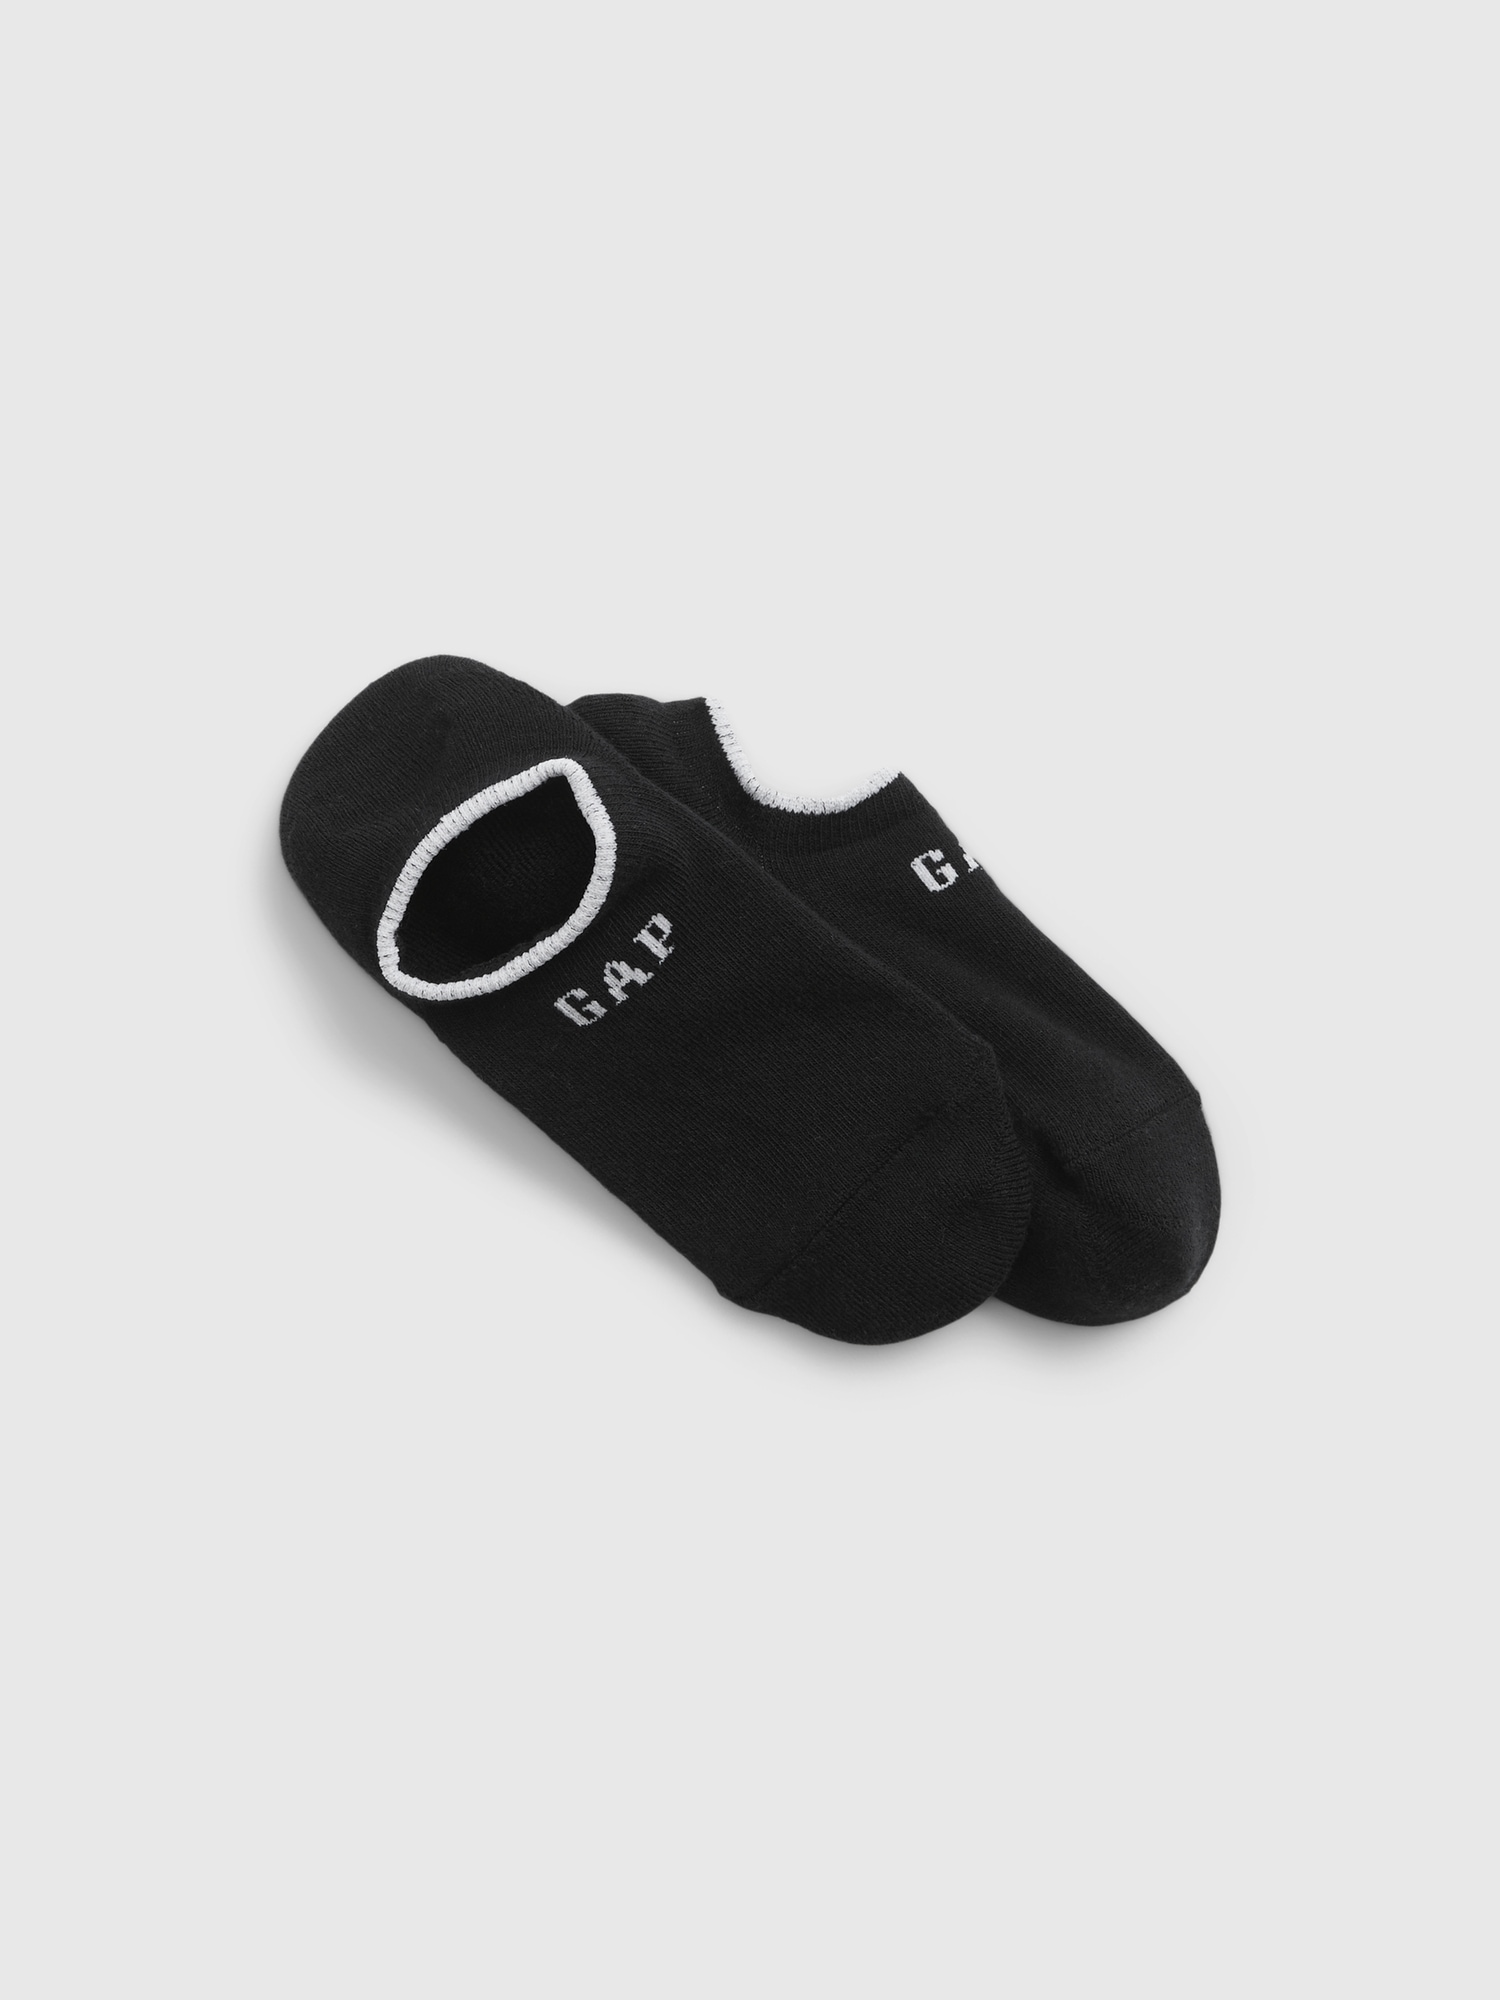 Gap Unisex Athletic Ankle Socks black. 1